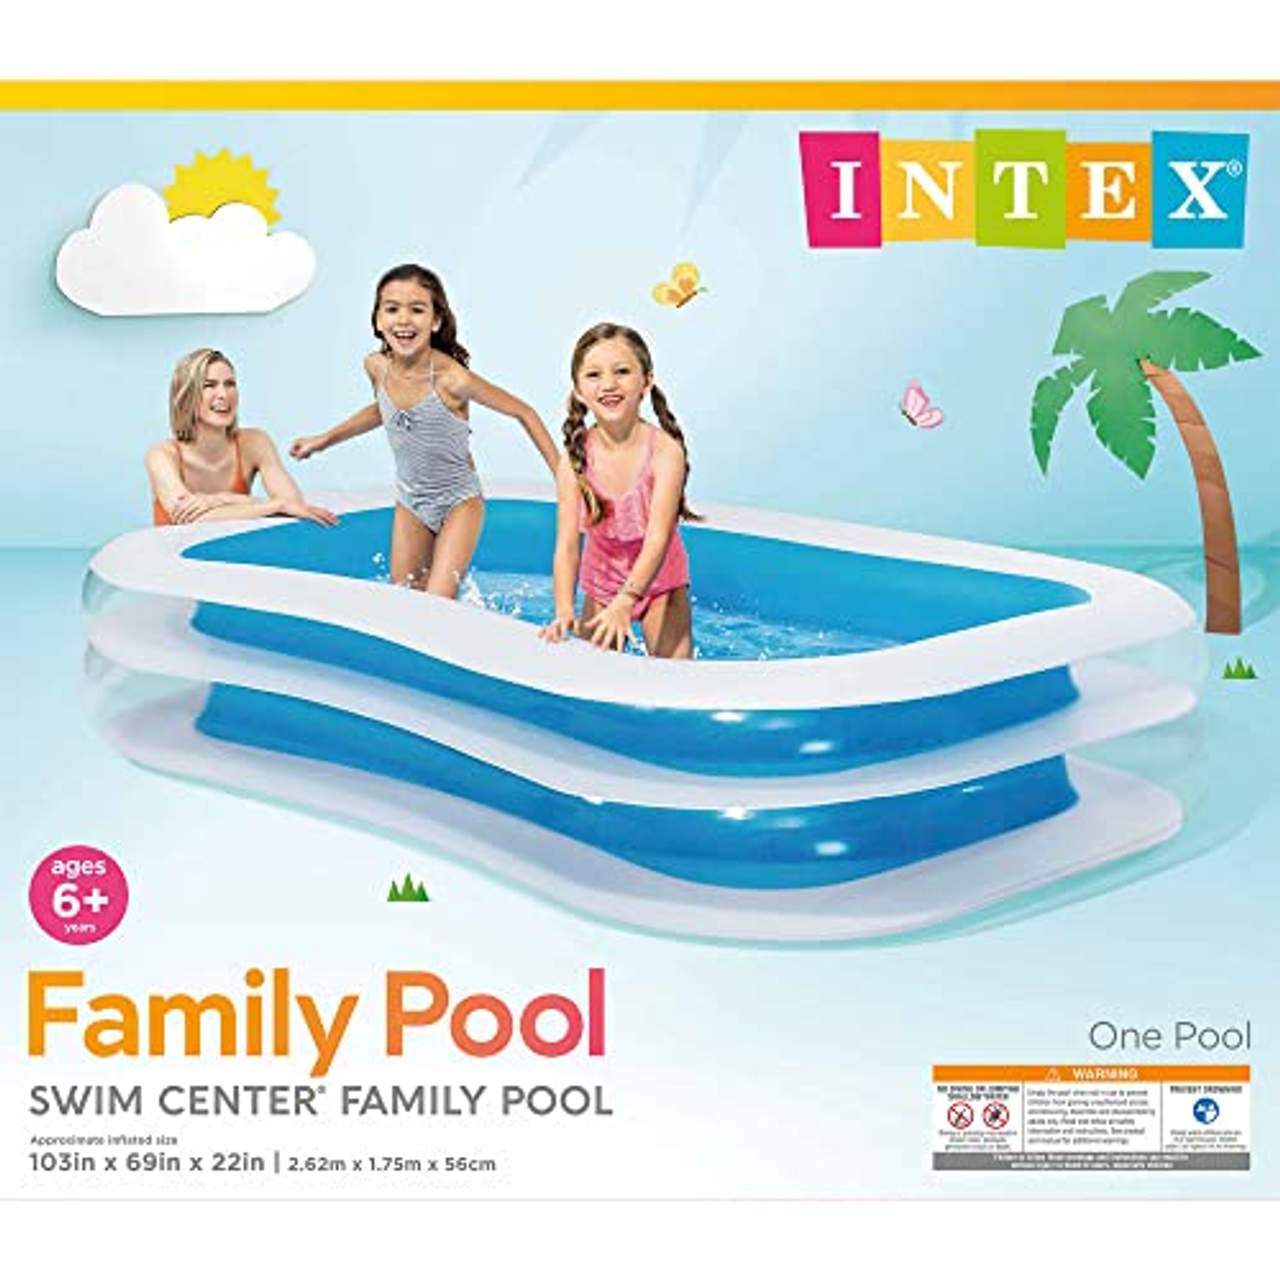 Intex Swim Center Family Pool